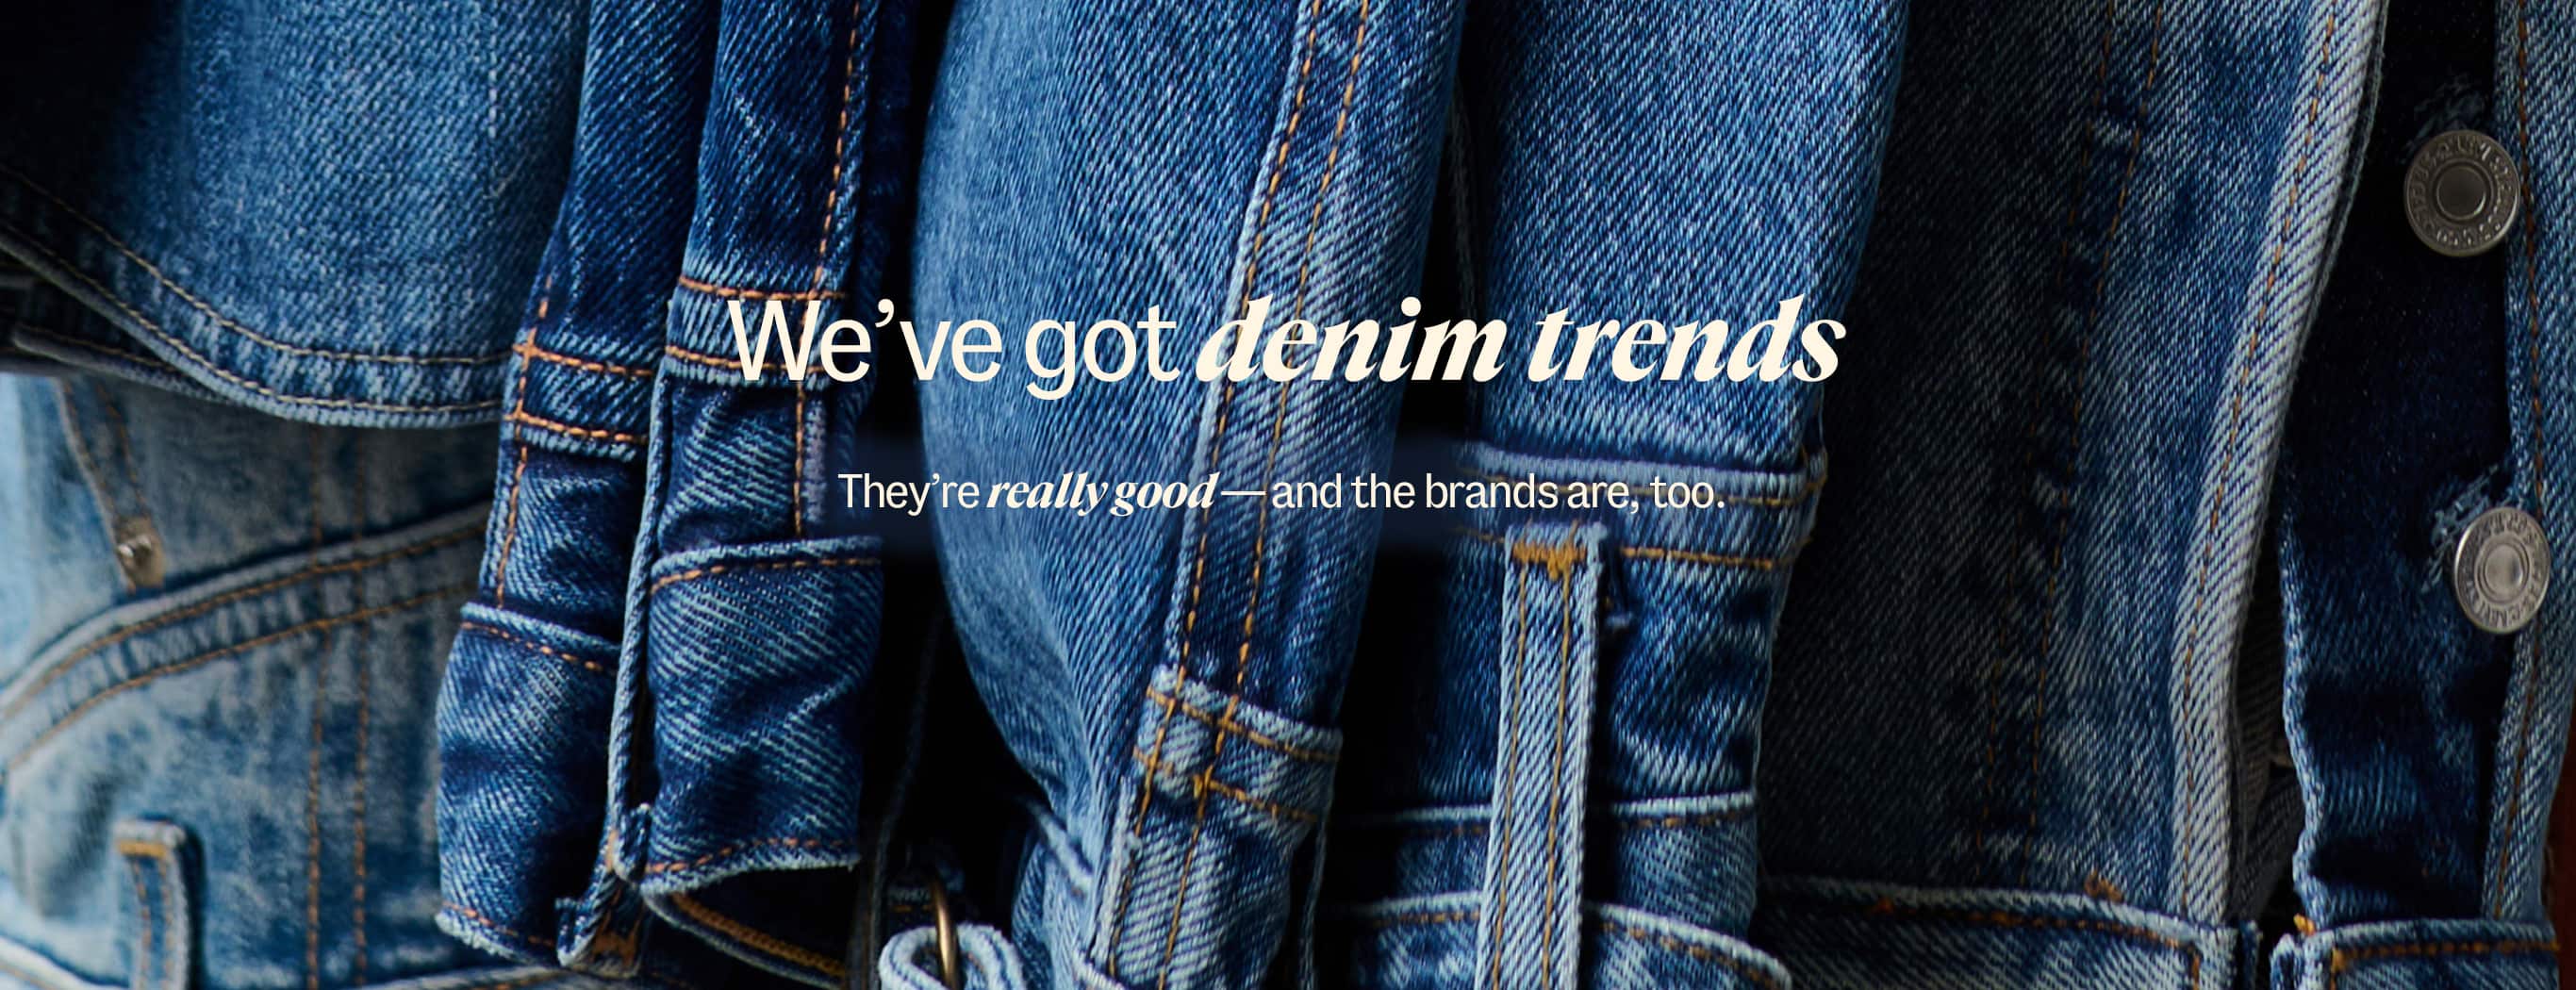 we've got denim trends. TheyÃ¢ÂÂre really goodÃ¢ÂÂand the brands are, too.